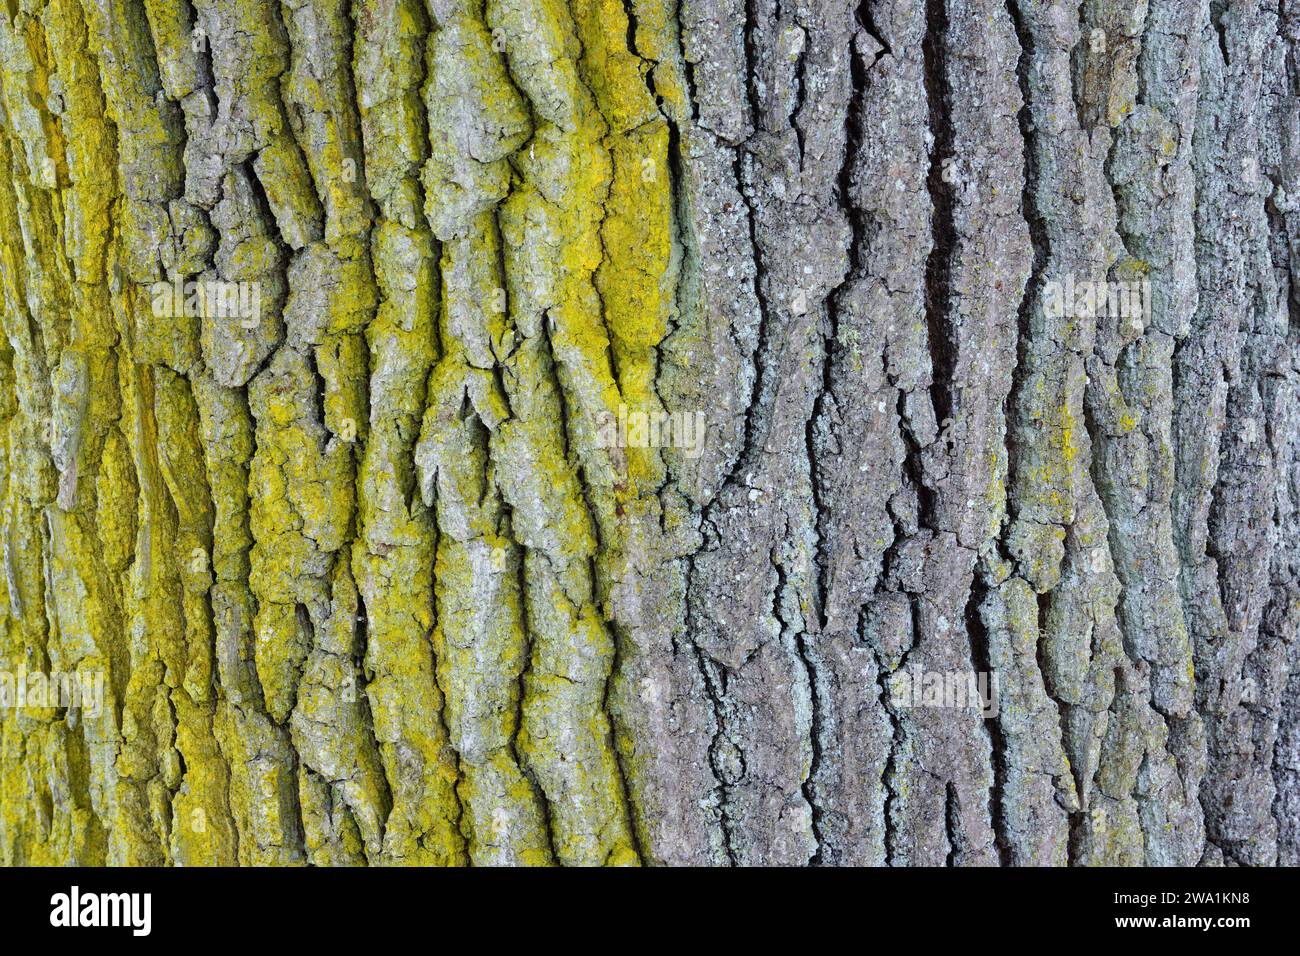 Closeup of Oak bark texture Stock Photo